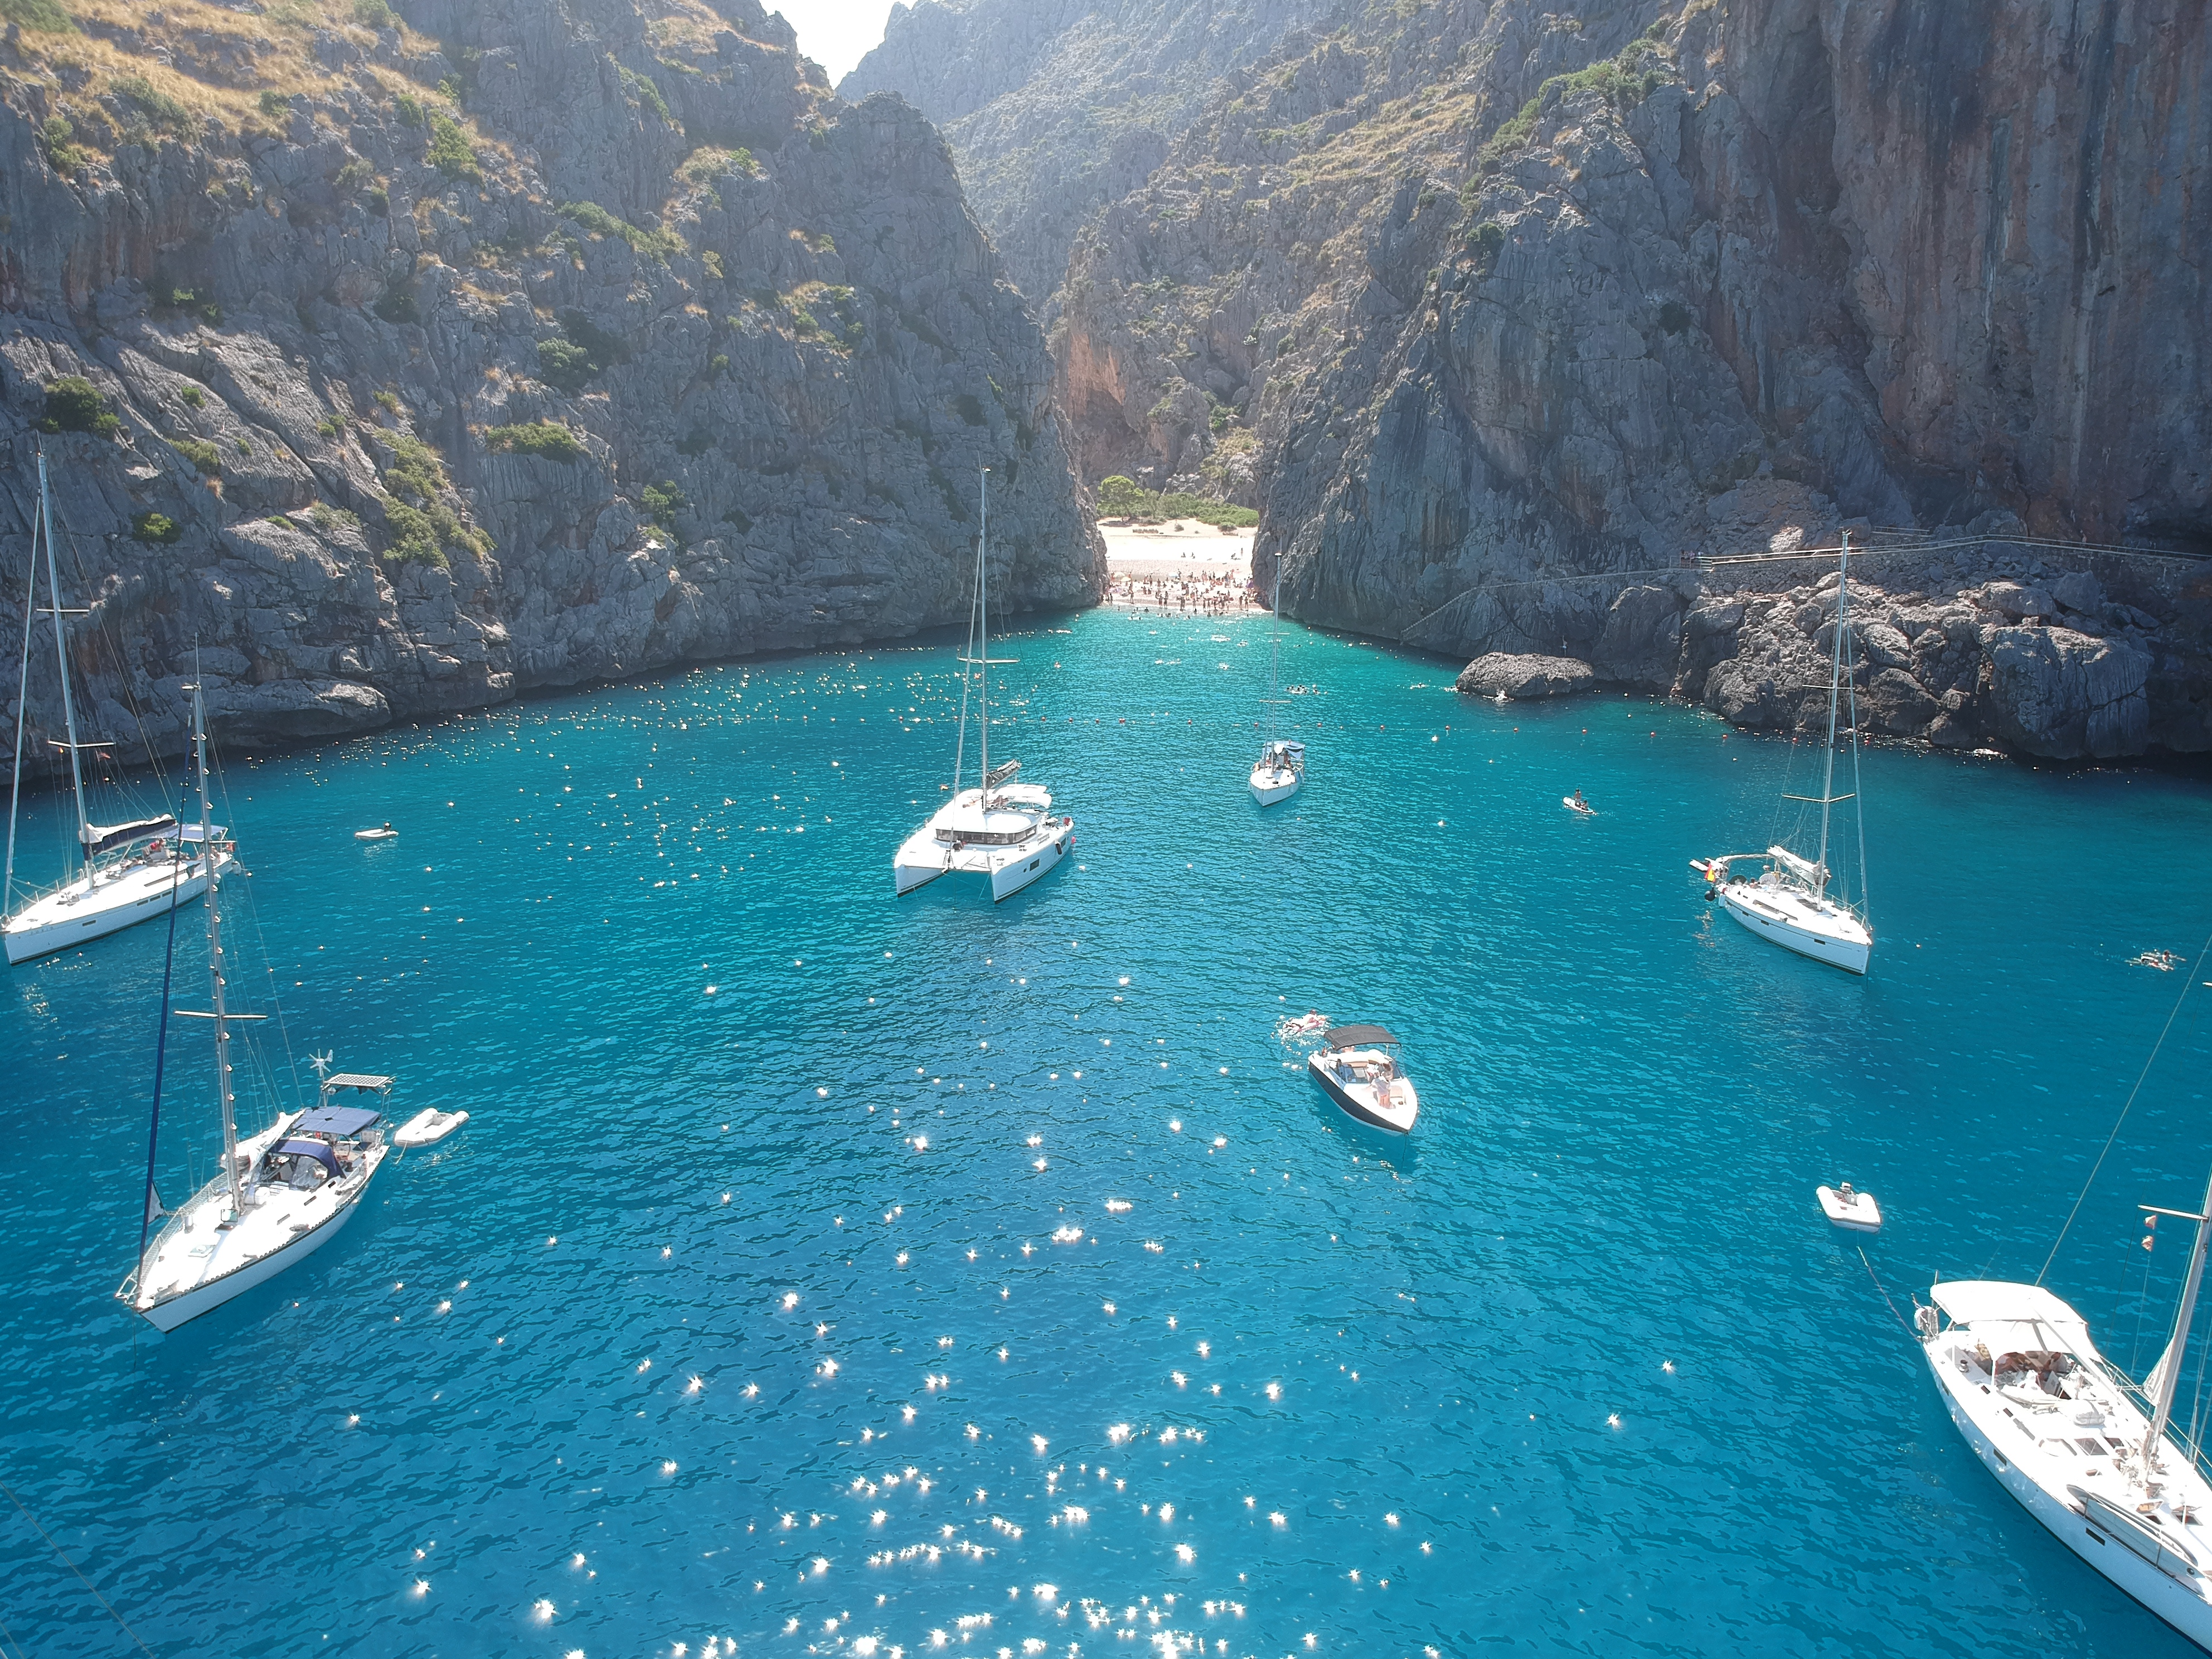 Alquiler-Barcos-Mallorca-veleros-vacaciones-Baleares-mediterraneo-flotilla-familiar